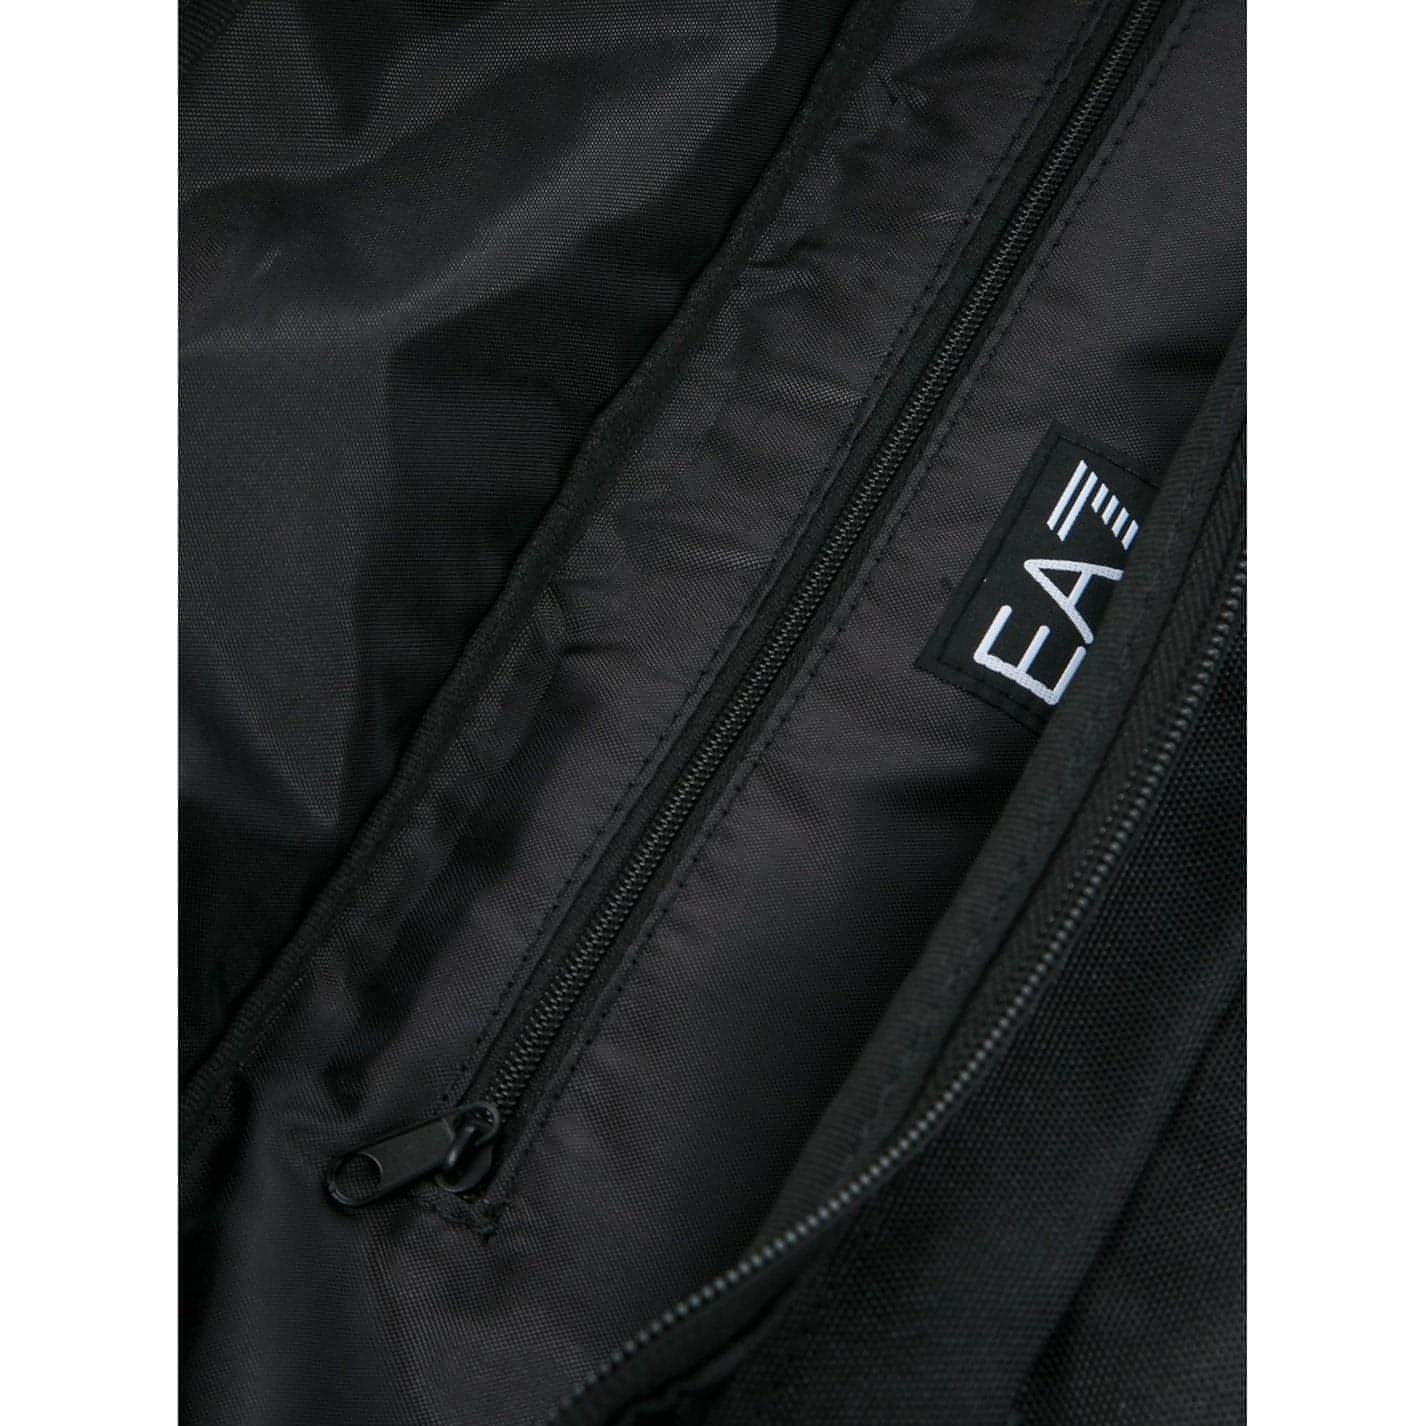 EA7 vyriška juoda rankinė per petį Shoulder bag